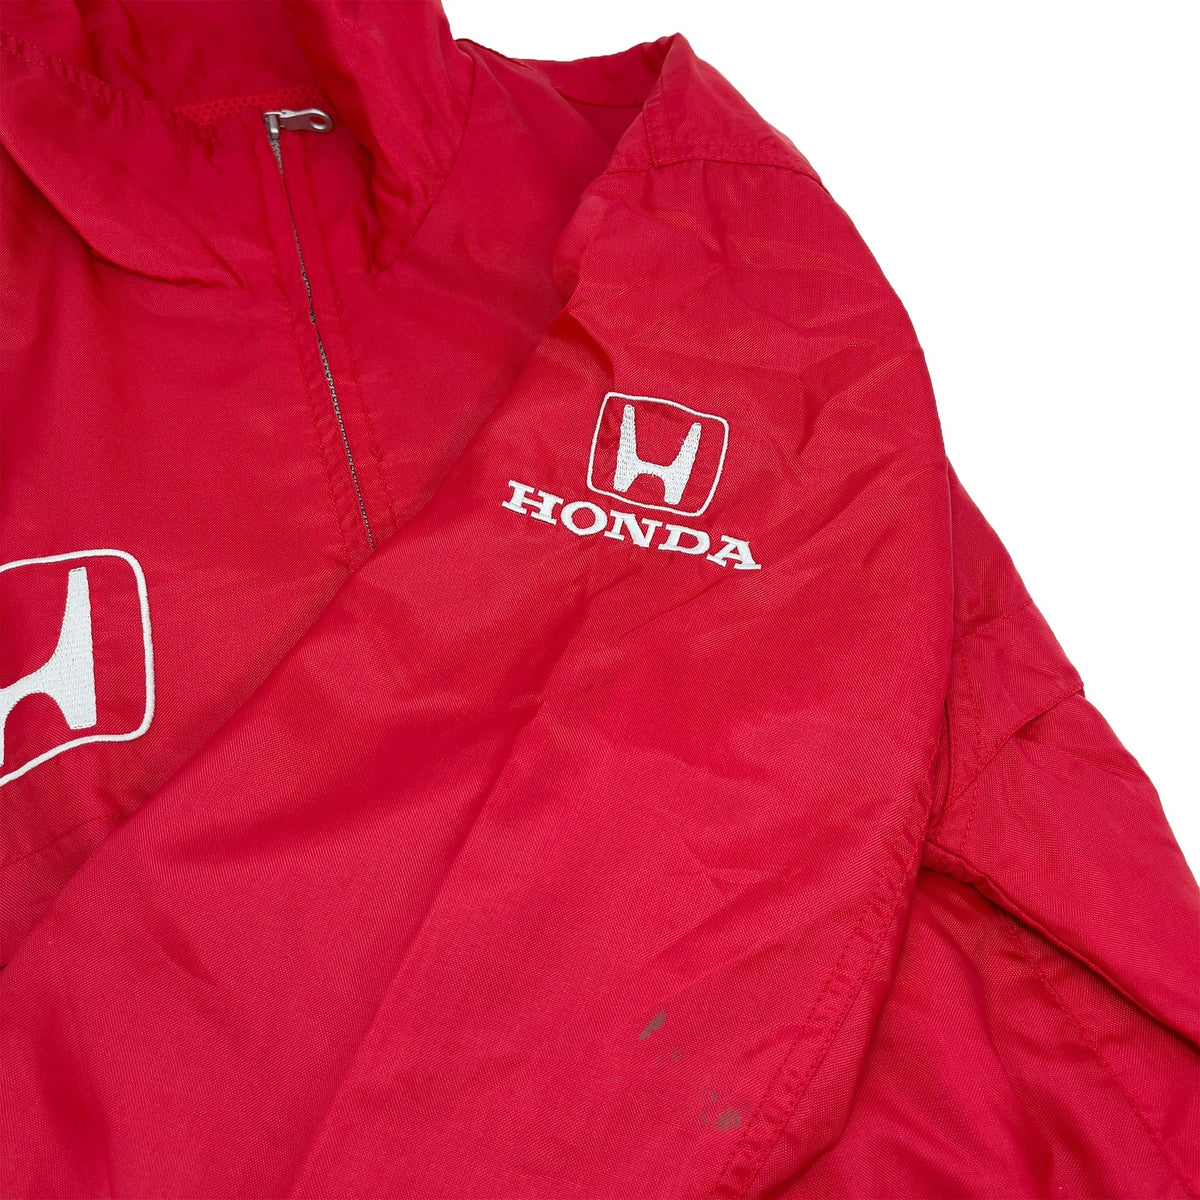 Retro Genuine JDM Japan Honda Motor Sports Racing Team Jacket Red - Sugoi JDM